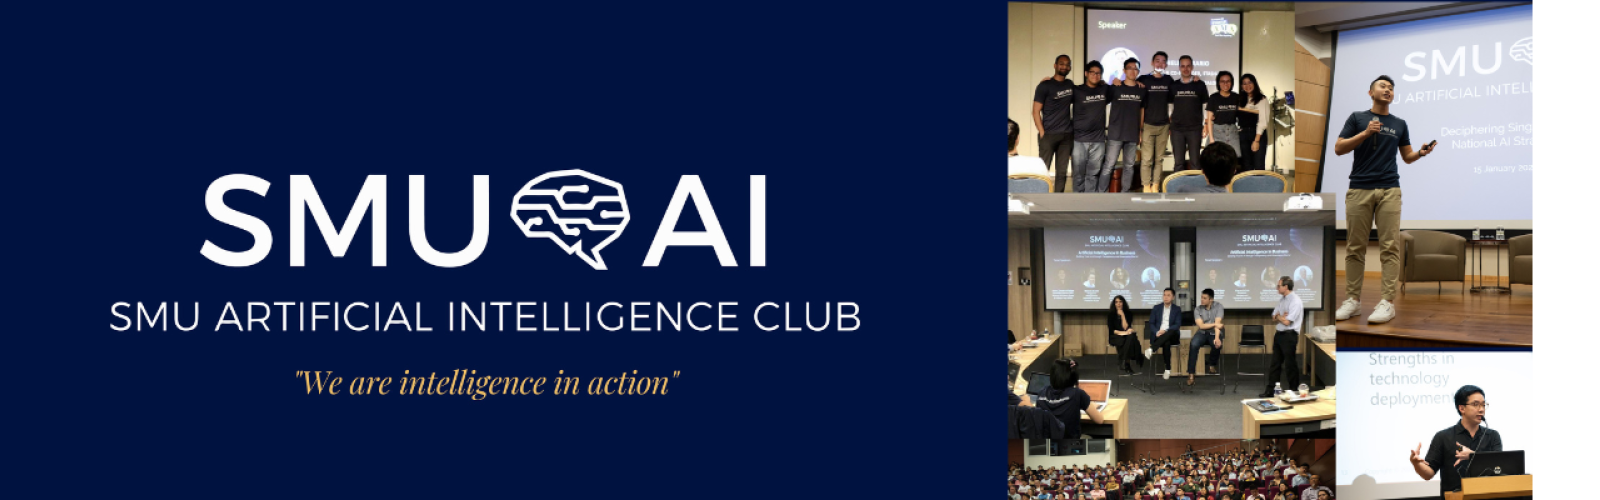 SMU Artificial Intelligence Banner